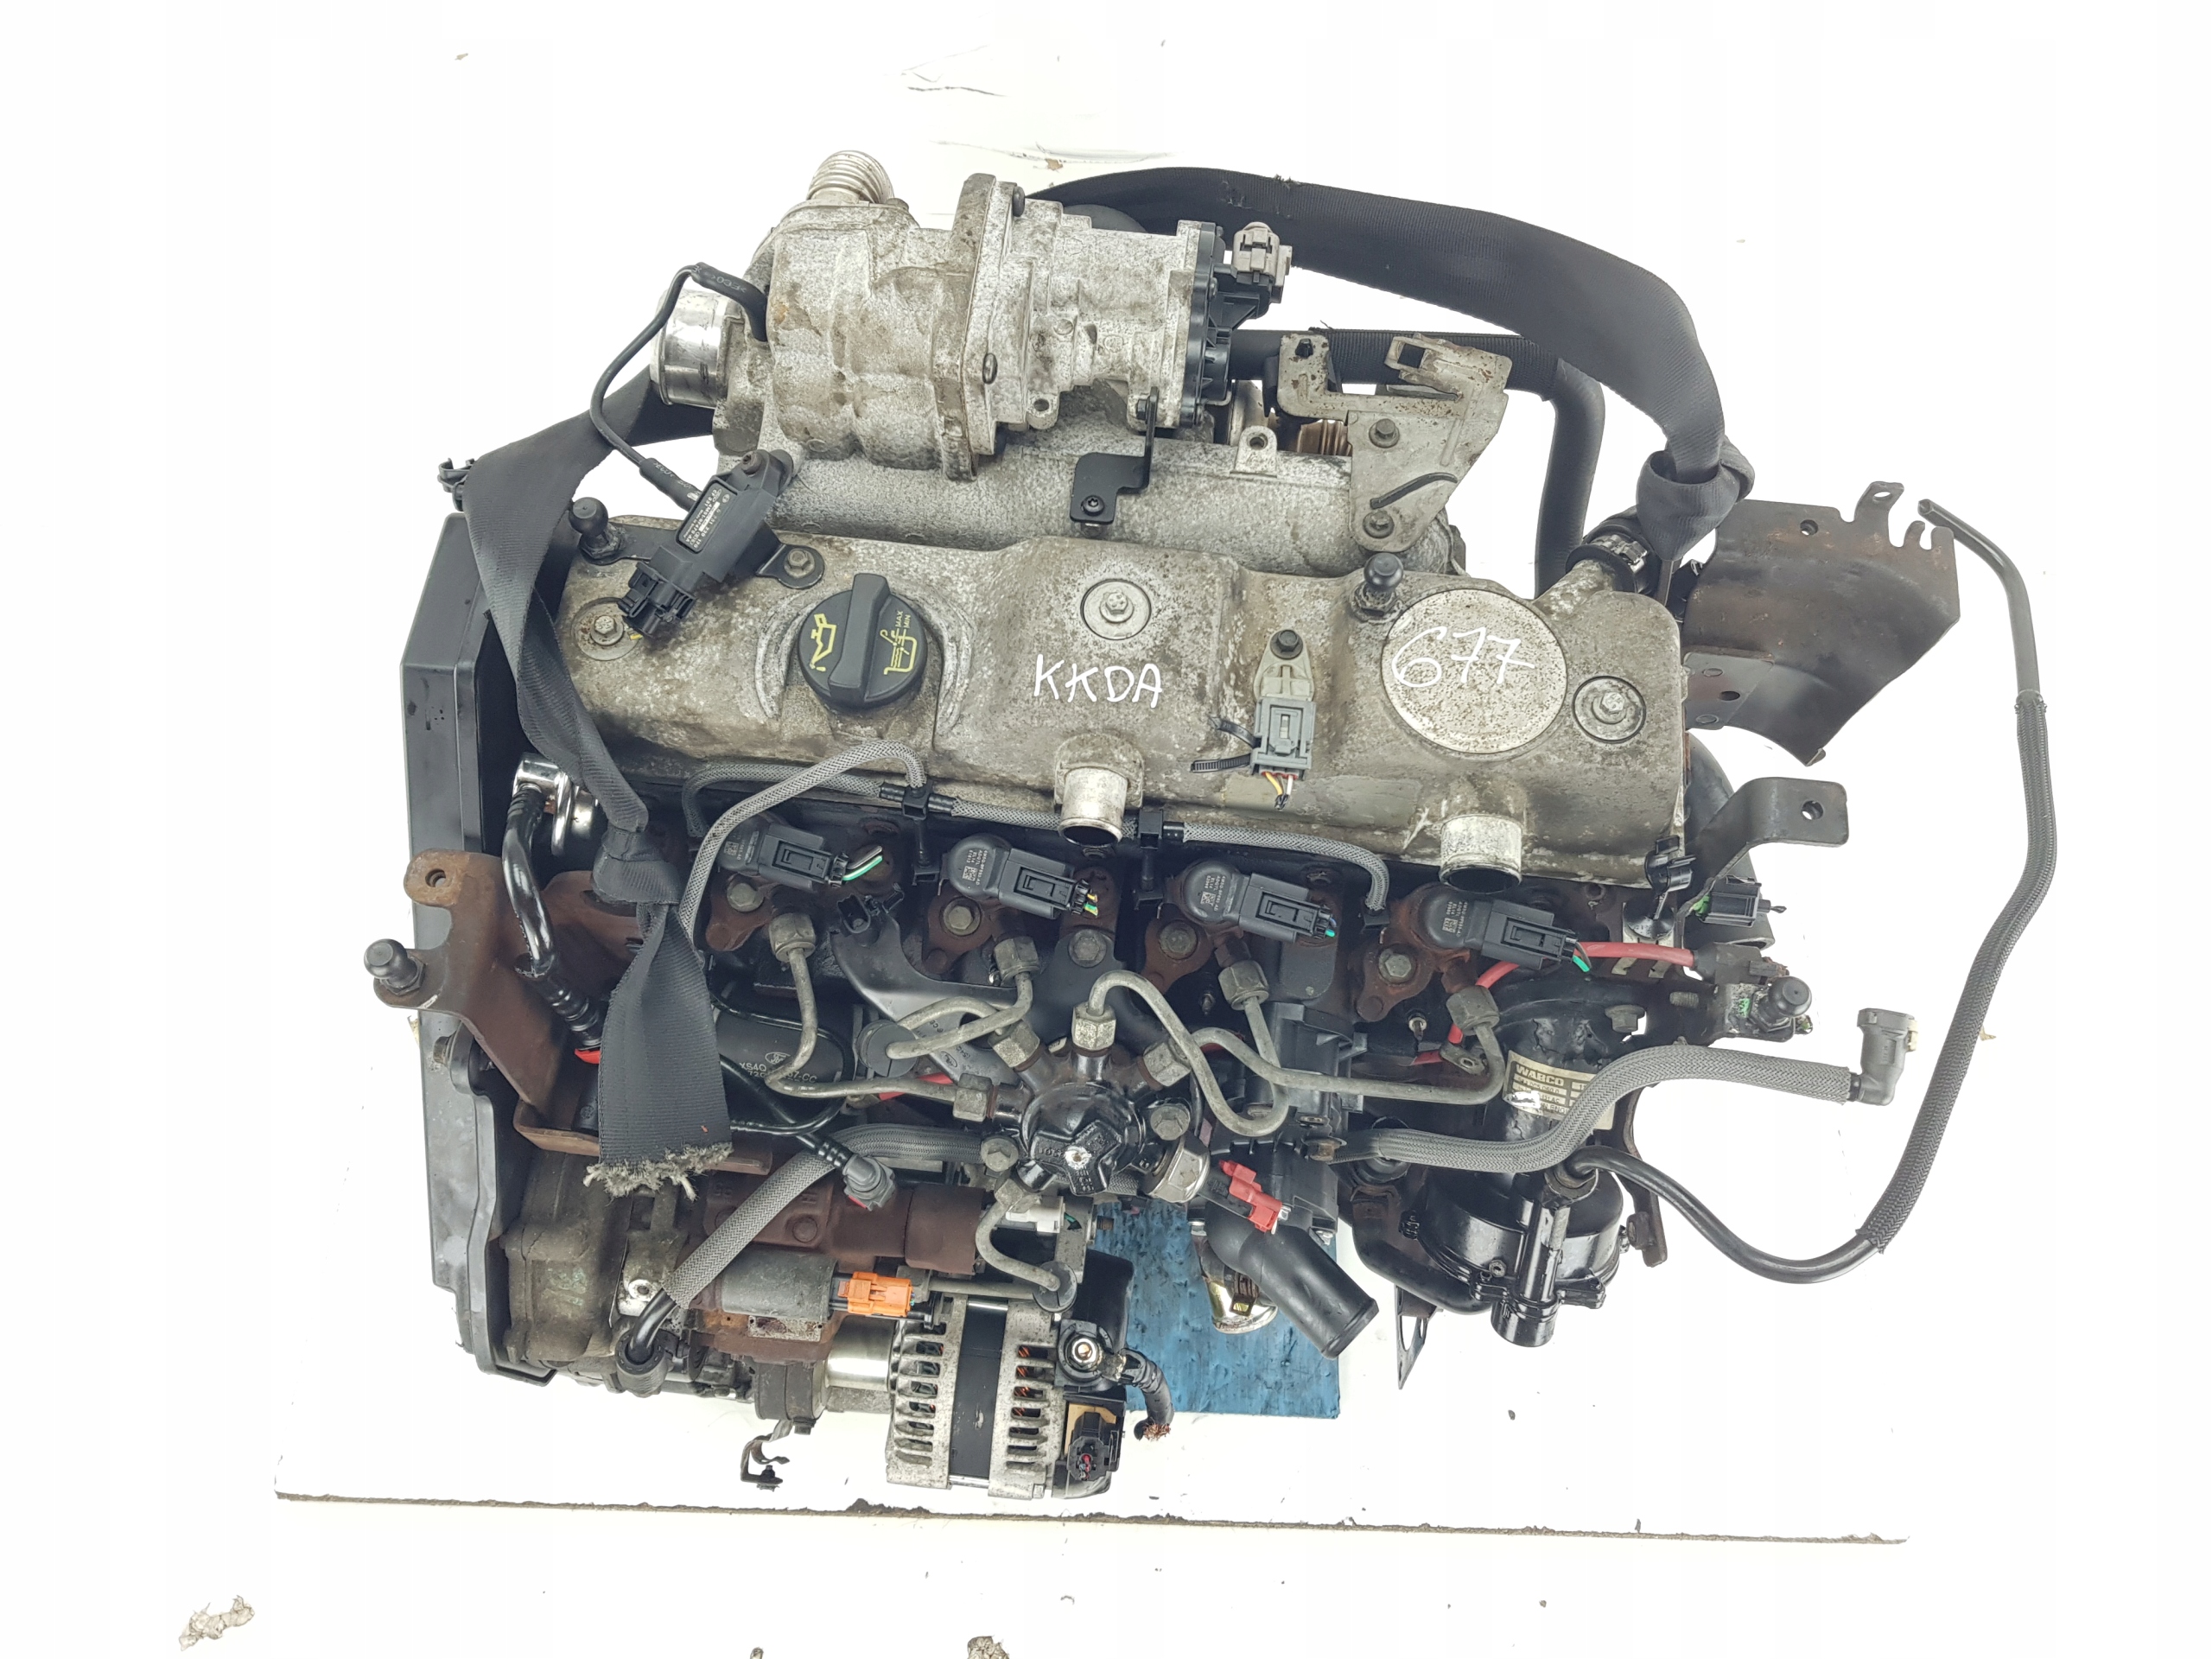 Ford Mondeo IV - silniki, dane, testy •